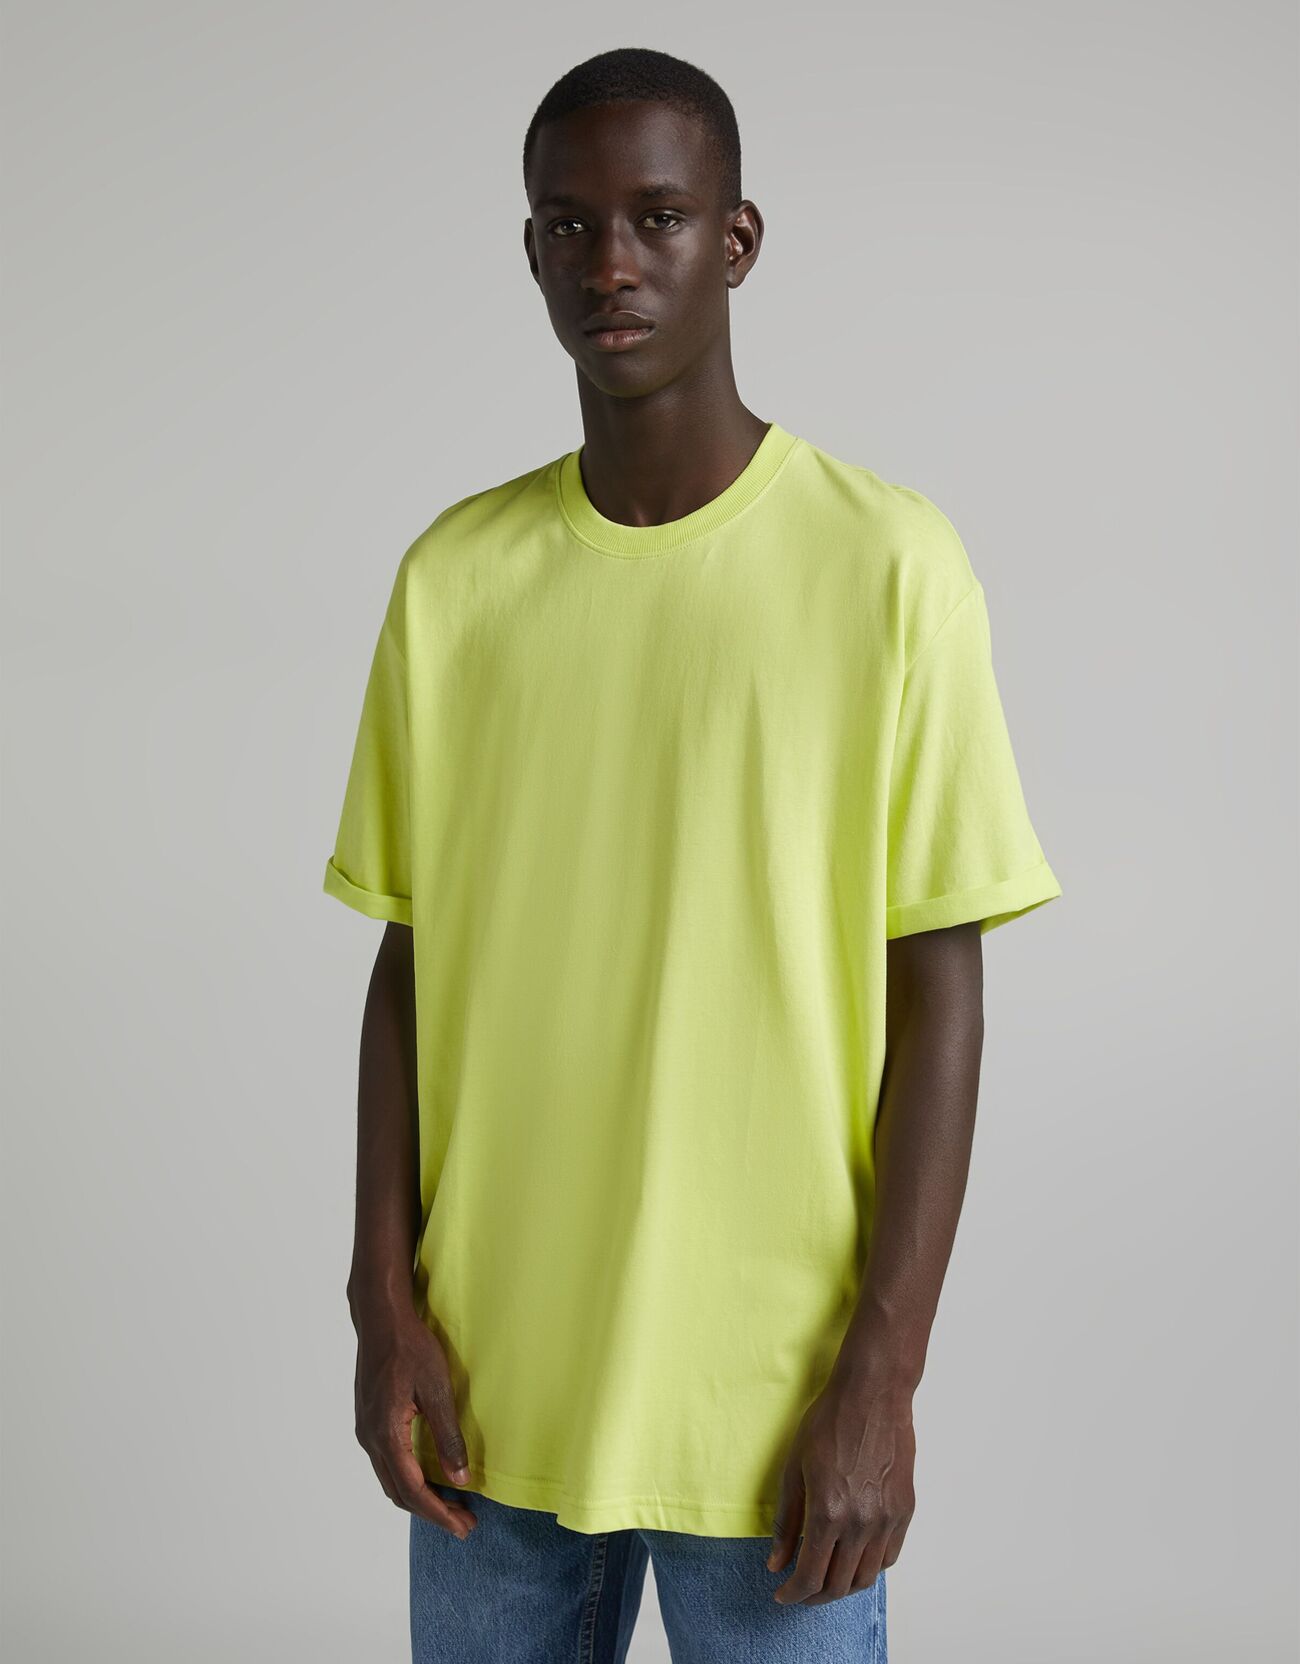 Bershka T-Shirt Manches Courtes Ultra Long Homme Xxl Lime